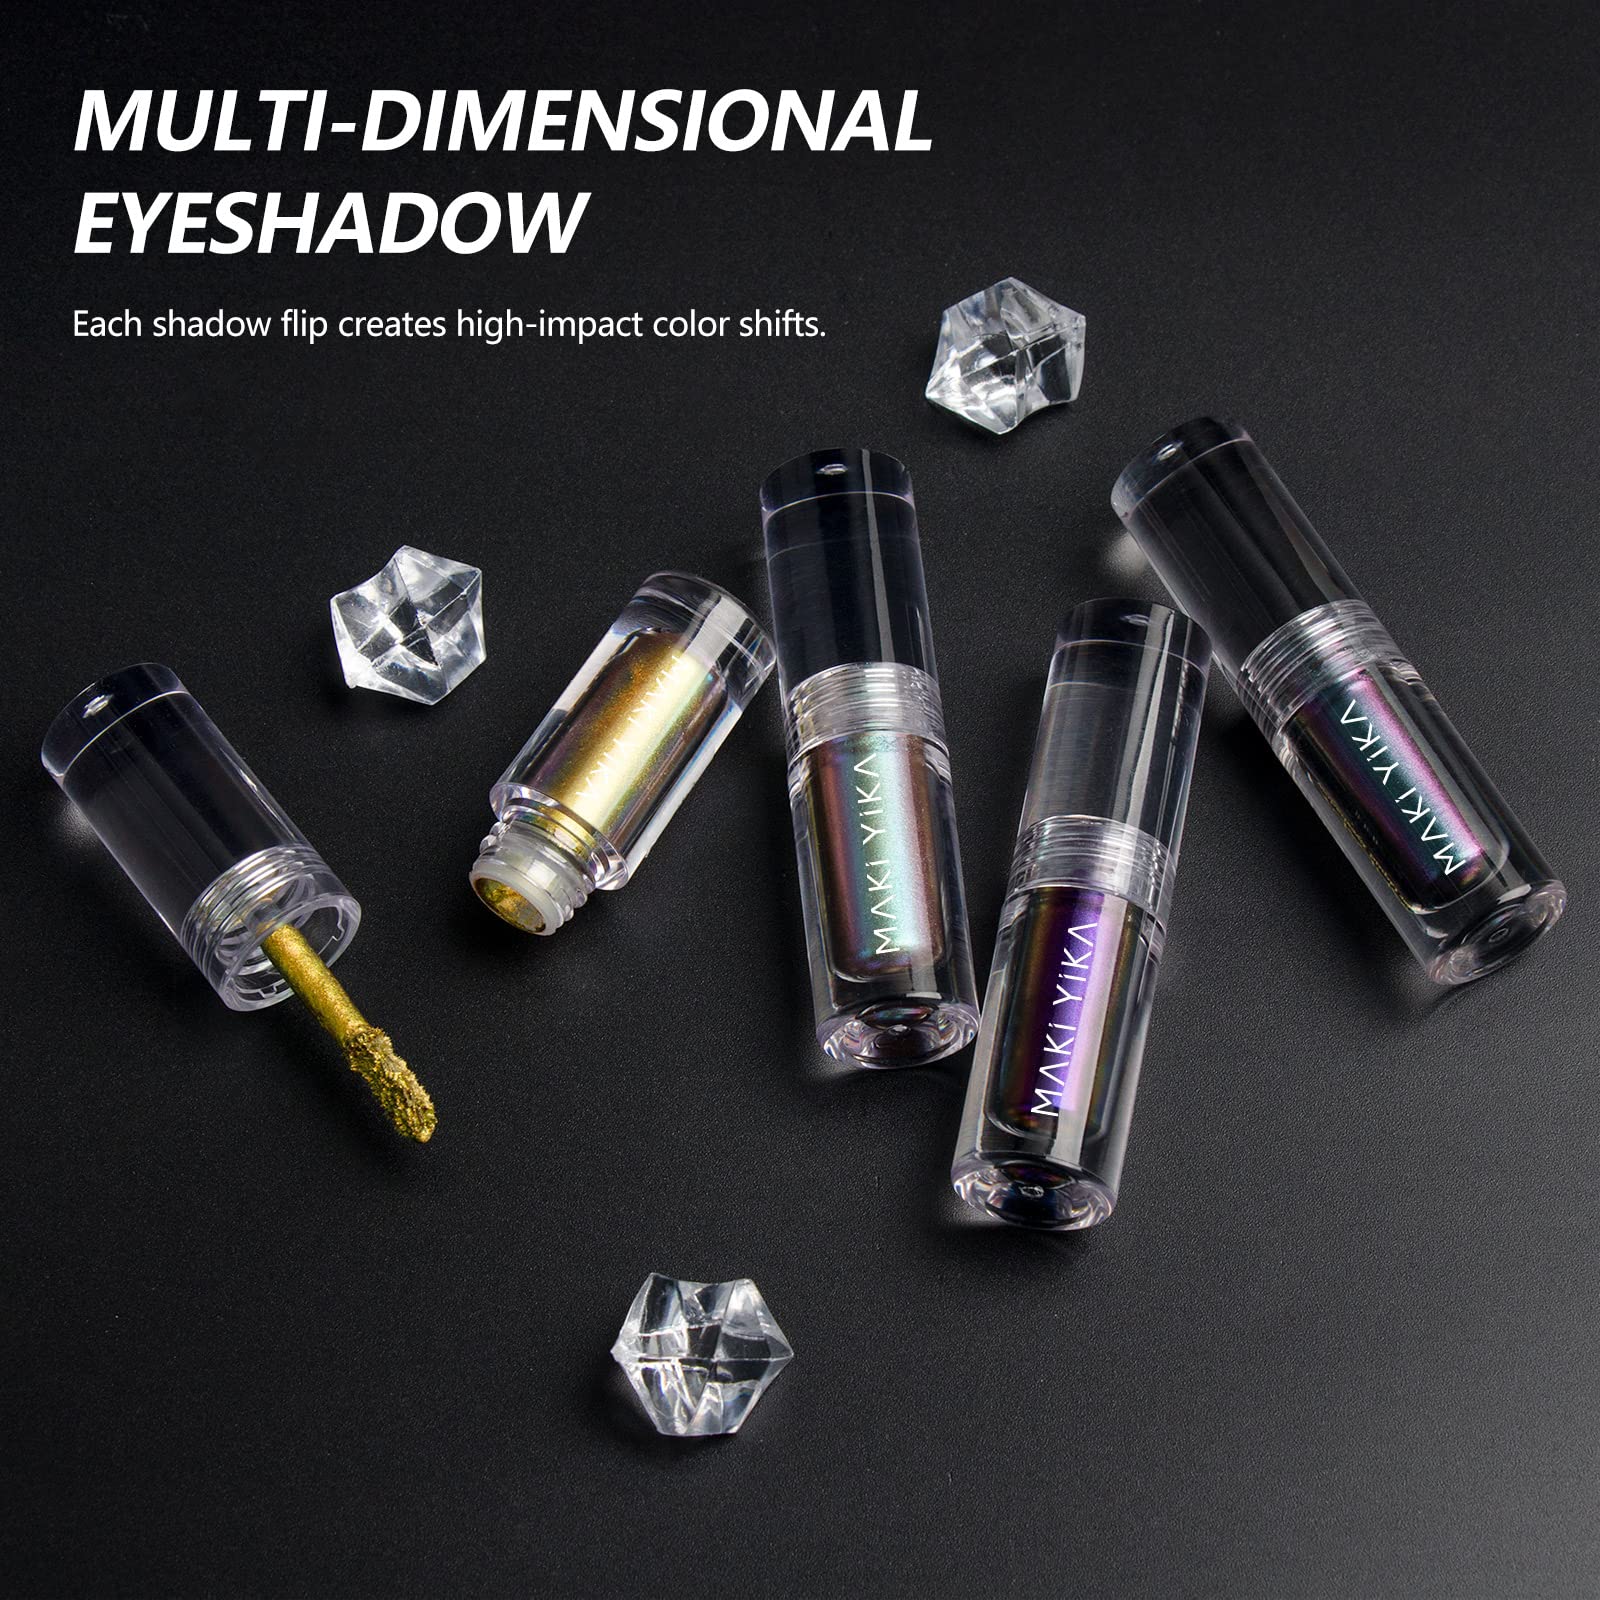 MAKI YIKA Glitter Eyeshadow Teal Liquid Multichrome Eyeshadows Long Lasting, Metallic Chameleon Eye Shadow Smudgeproof Holographic Multi-Dimensional Eye Looks (#3 Dawn)